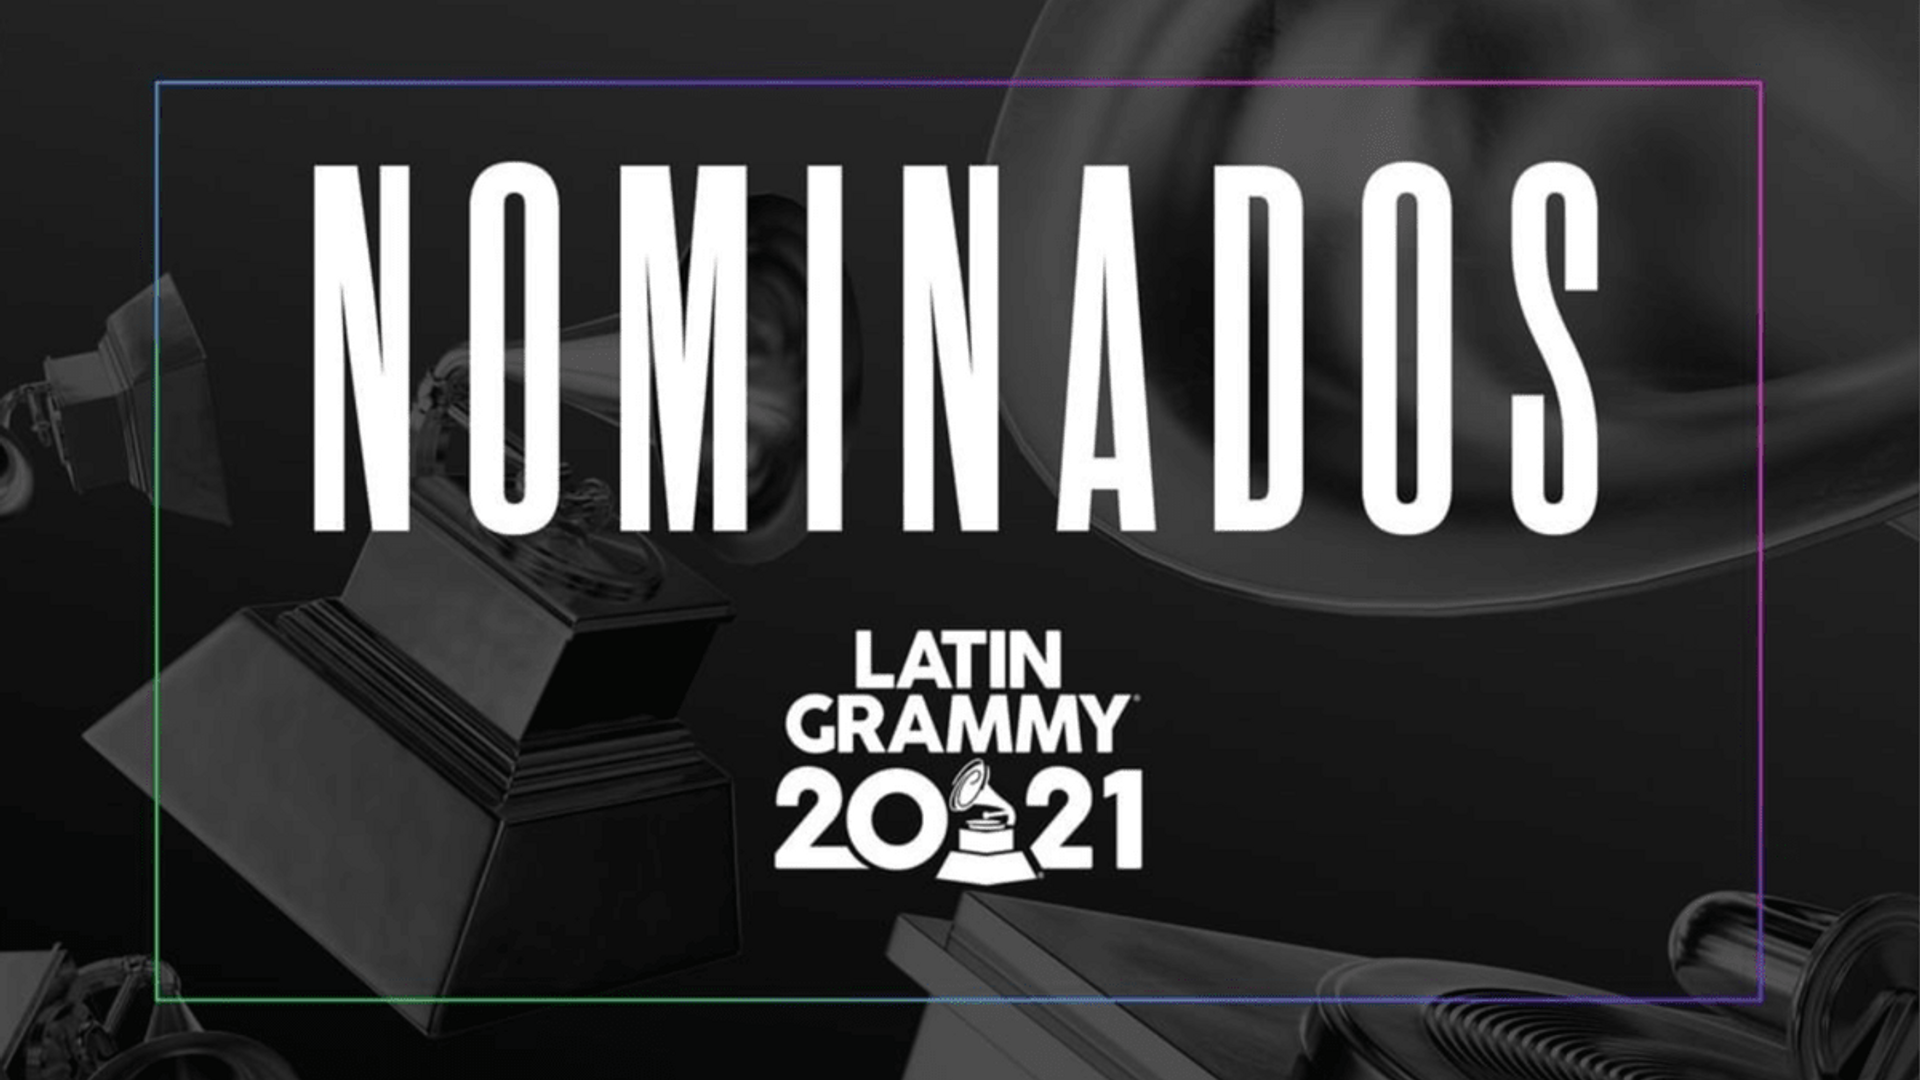 Latin Grammy nominations